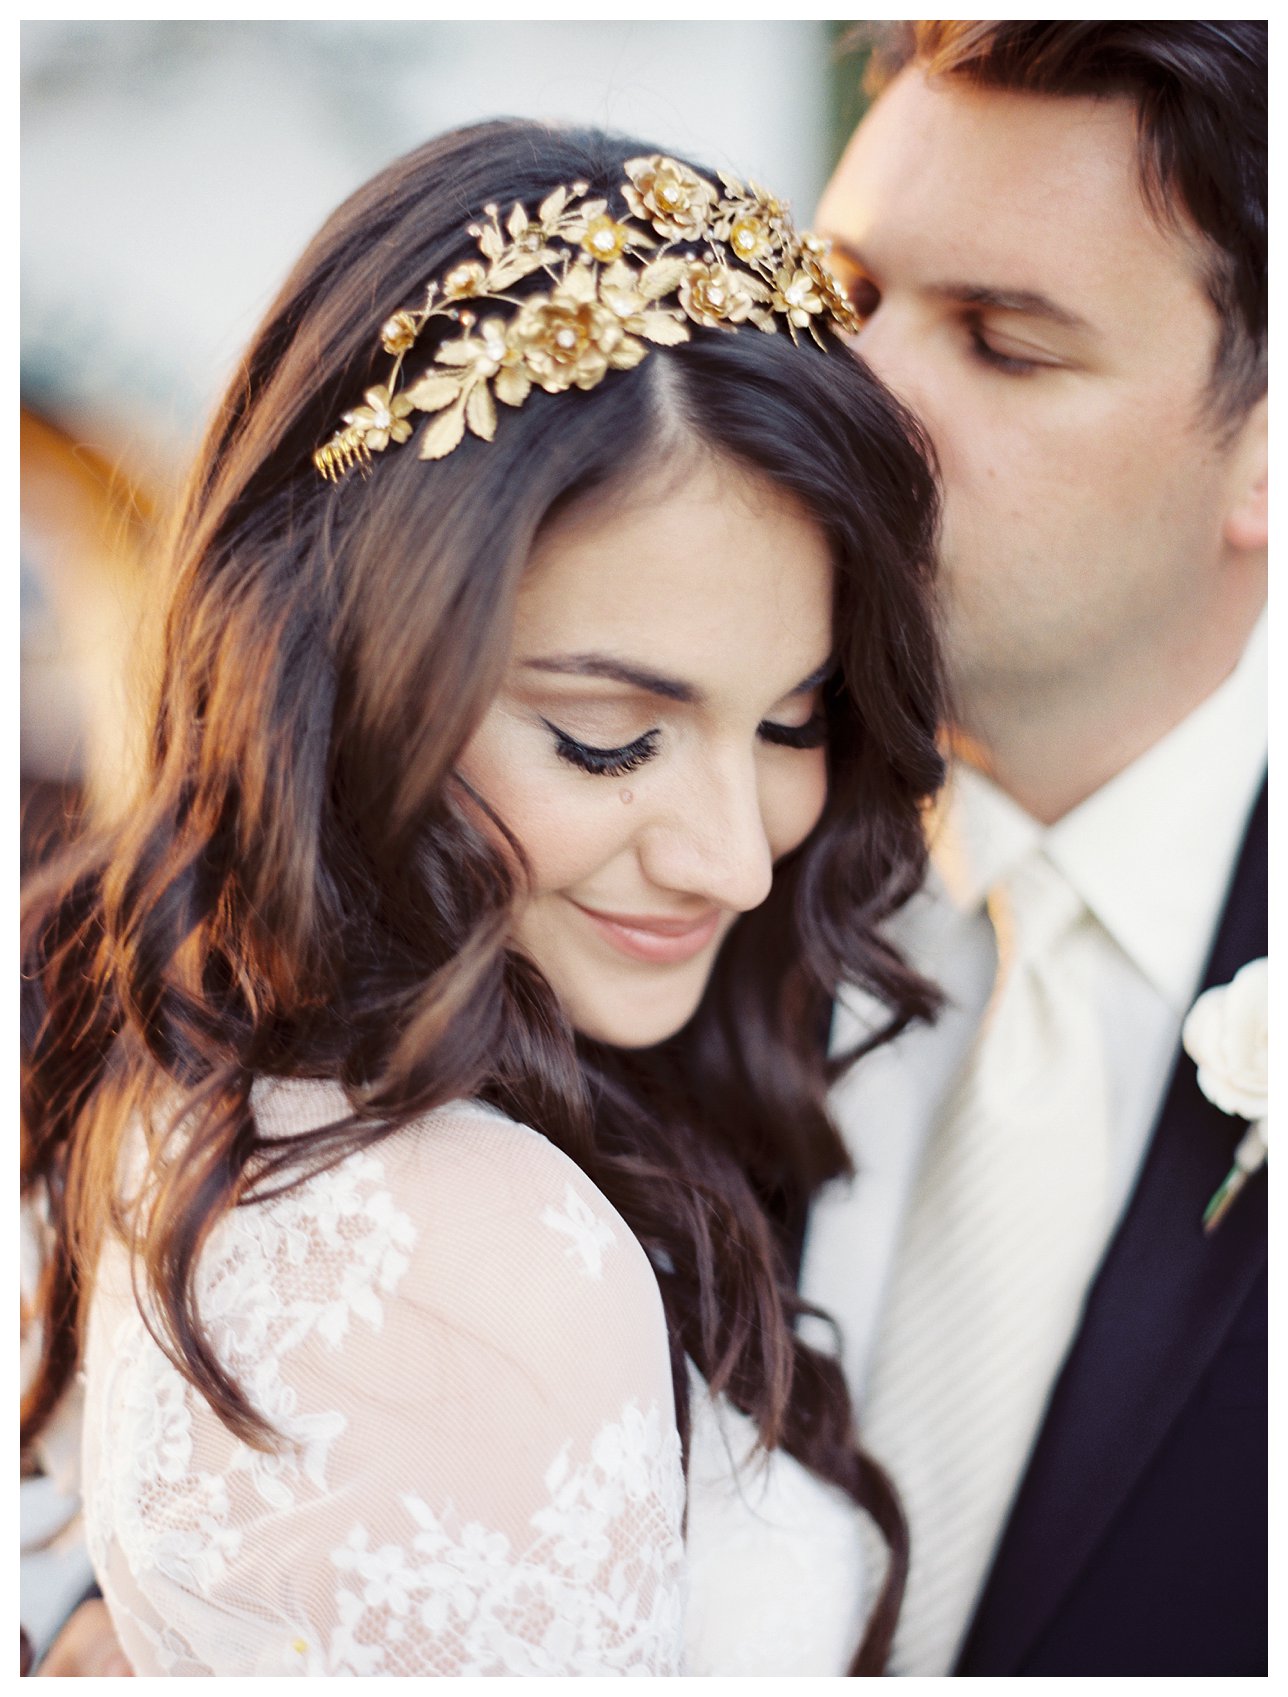 El Chorro wedding photos - Scottsdale Wedding Photographer | Rachel Solomon Photography_5810c